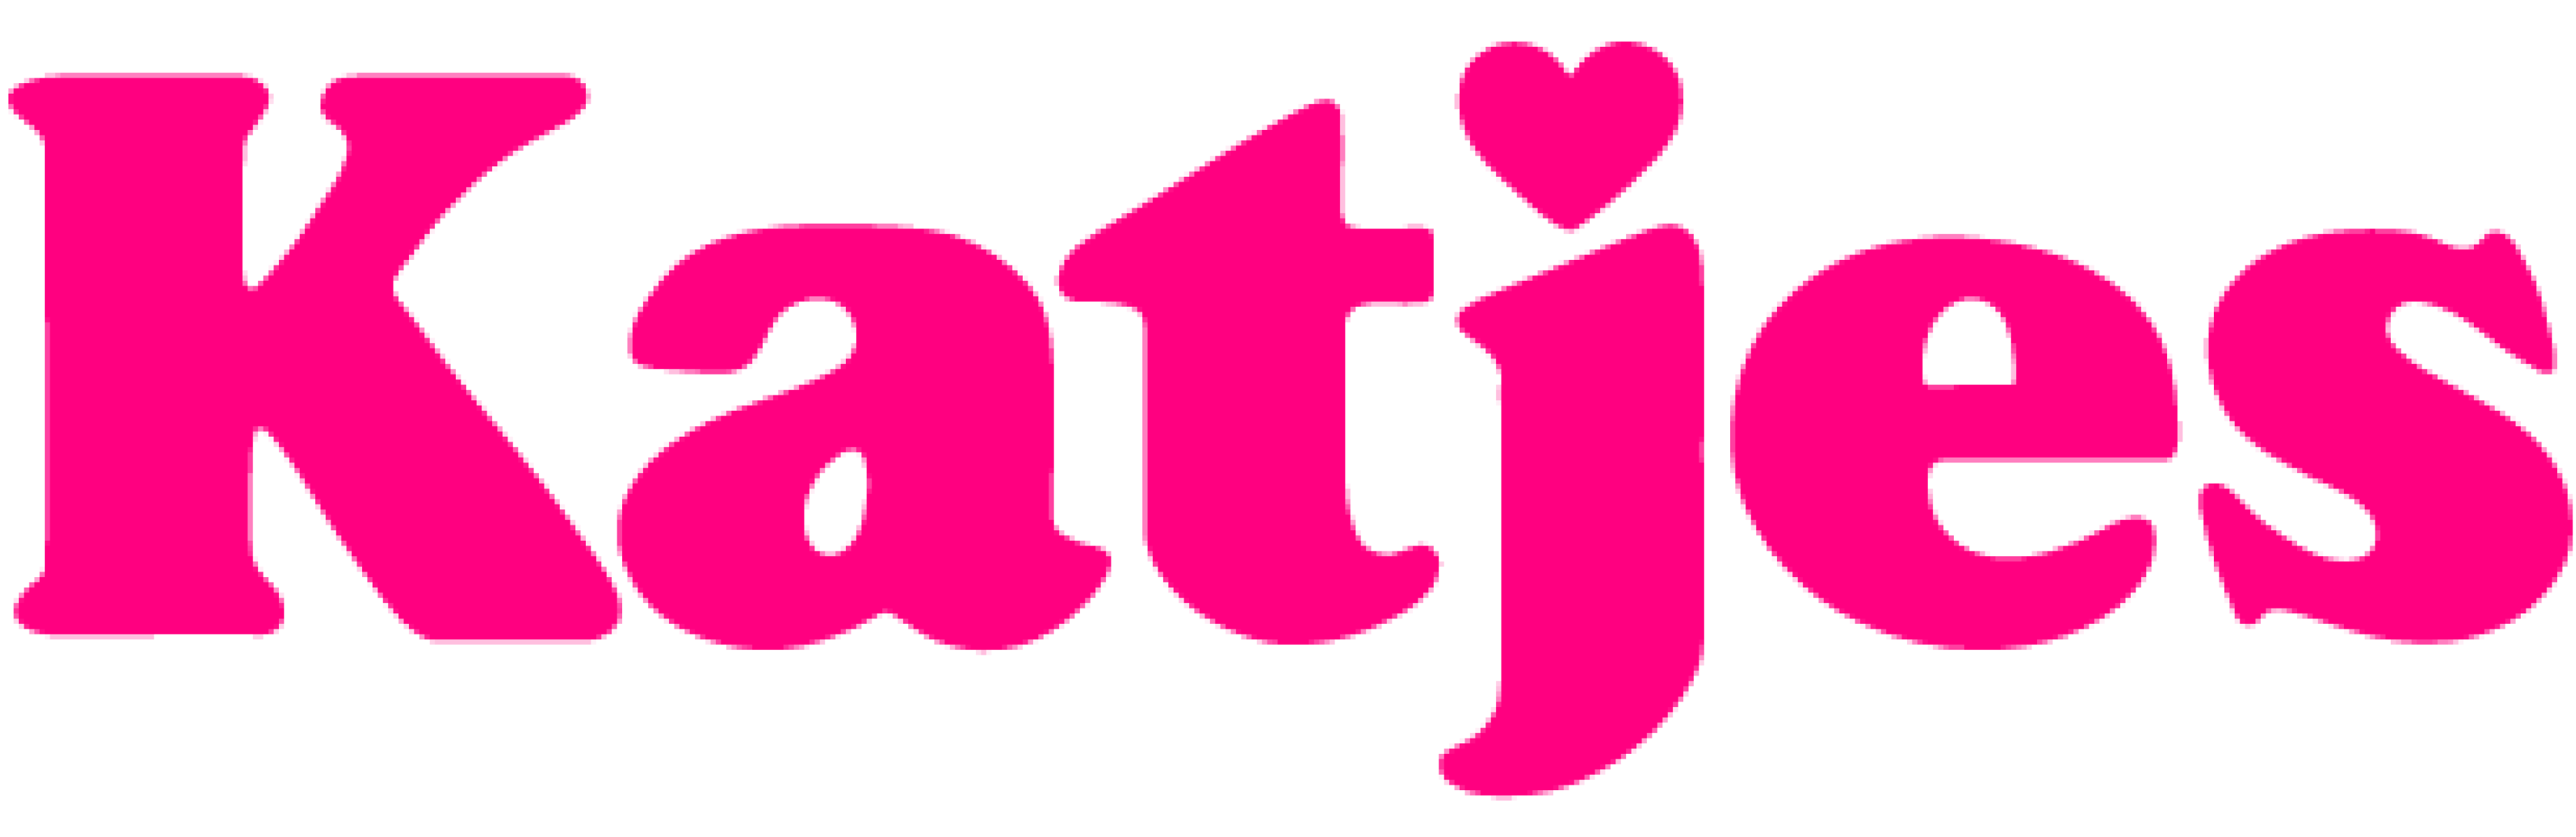 Katjes & memberr - Süße Erfolge durch bezahlte Mitgliedschaften logo